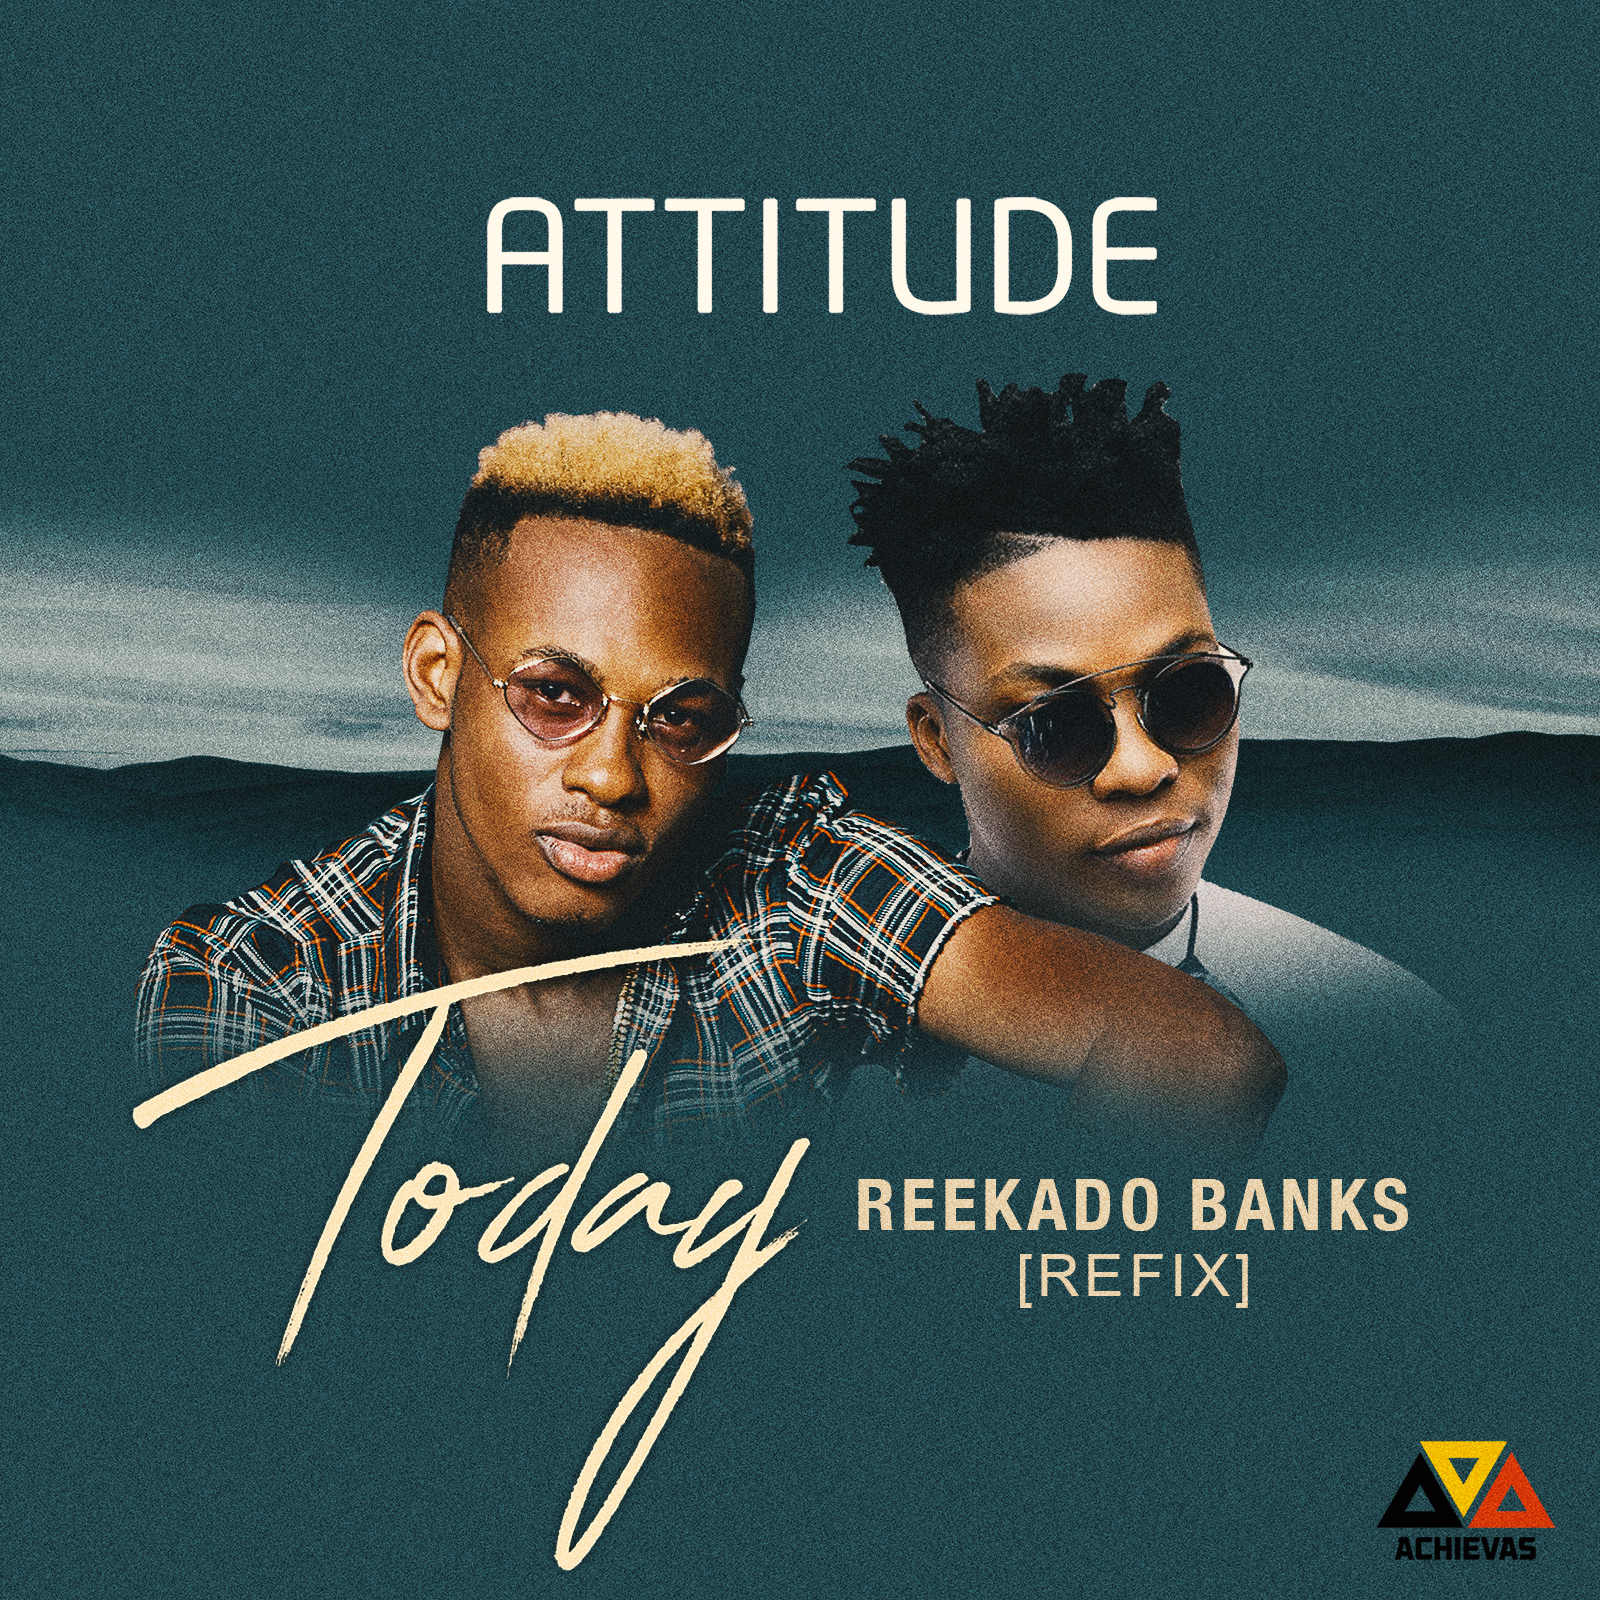 Attitude - Today (Reekado Banks Refix)